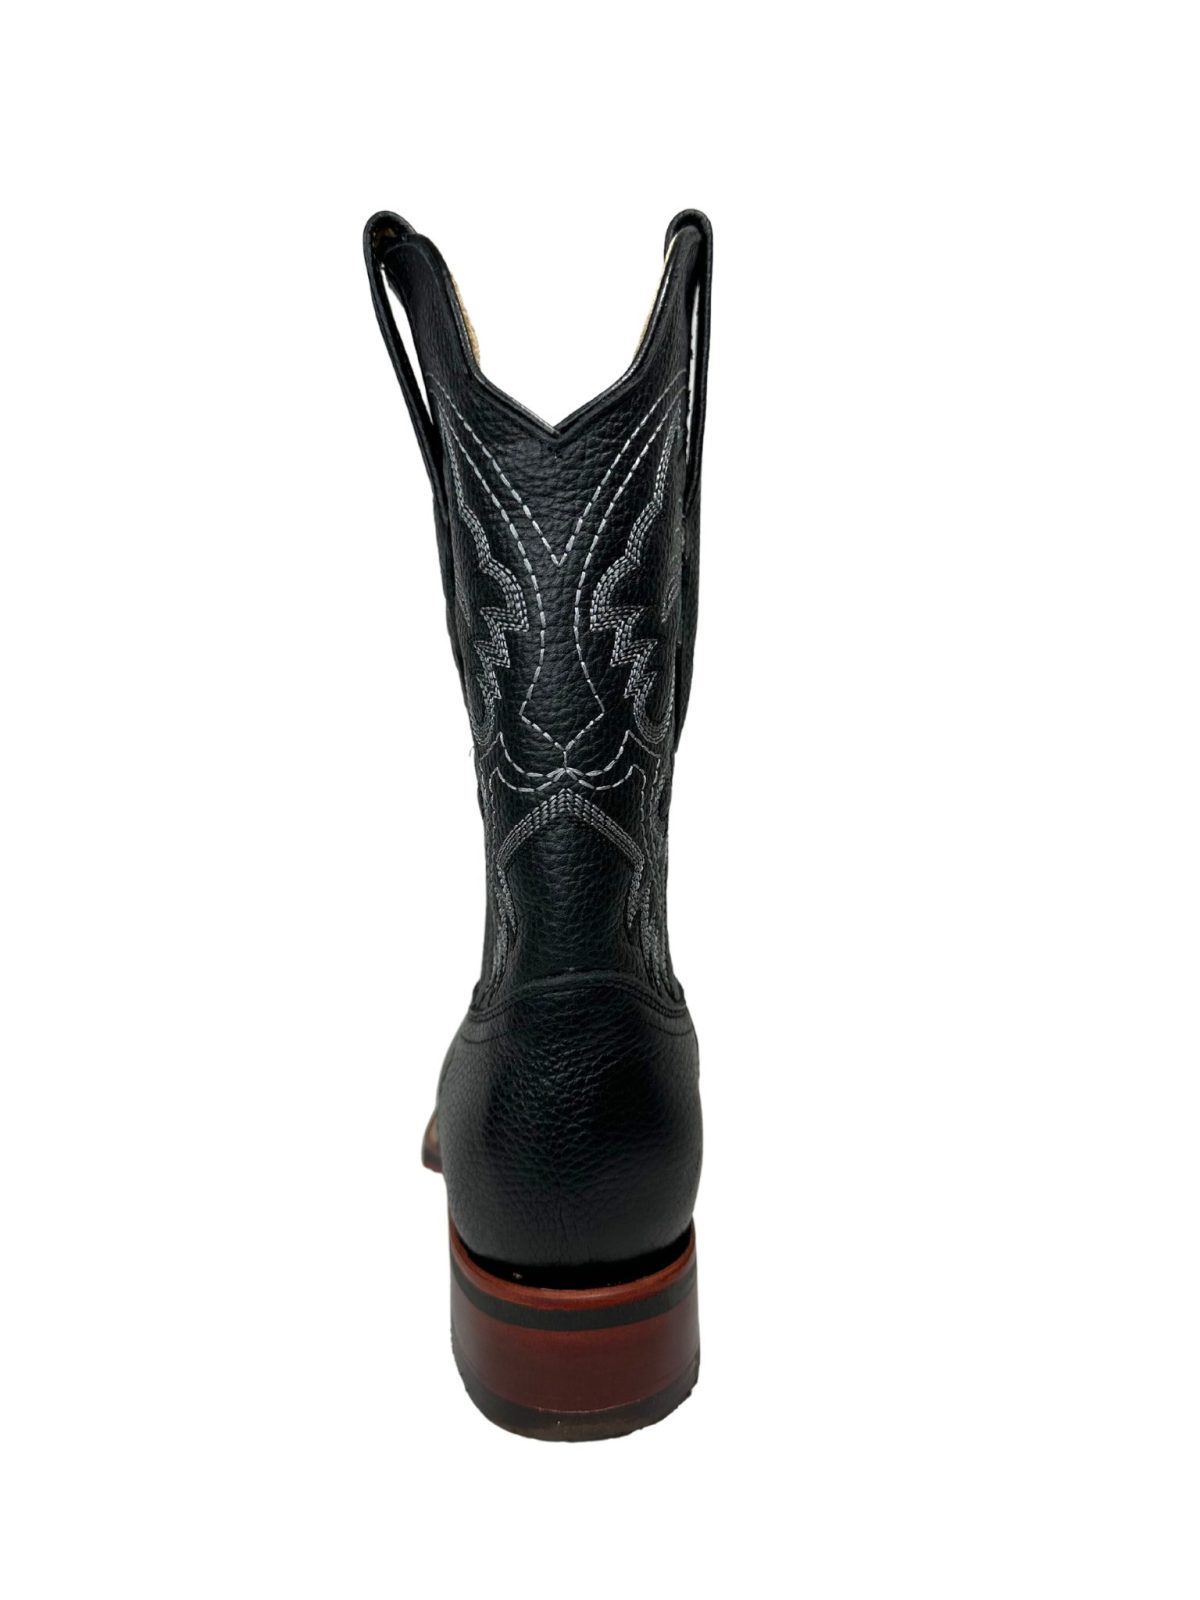 Los Altos Men's Black Square Toe Rubber Sole Leather Boot